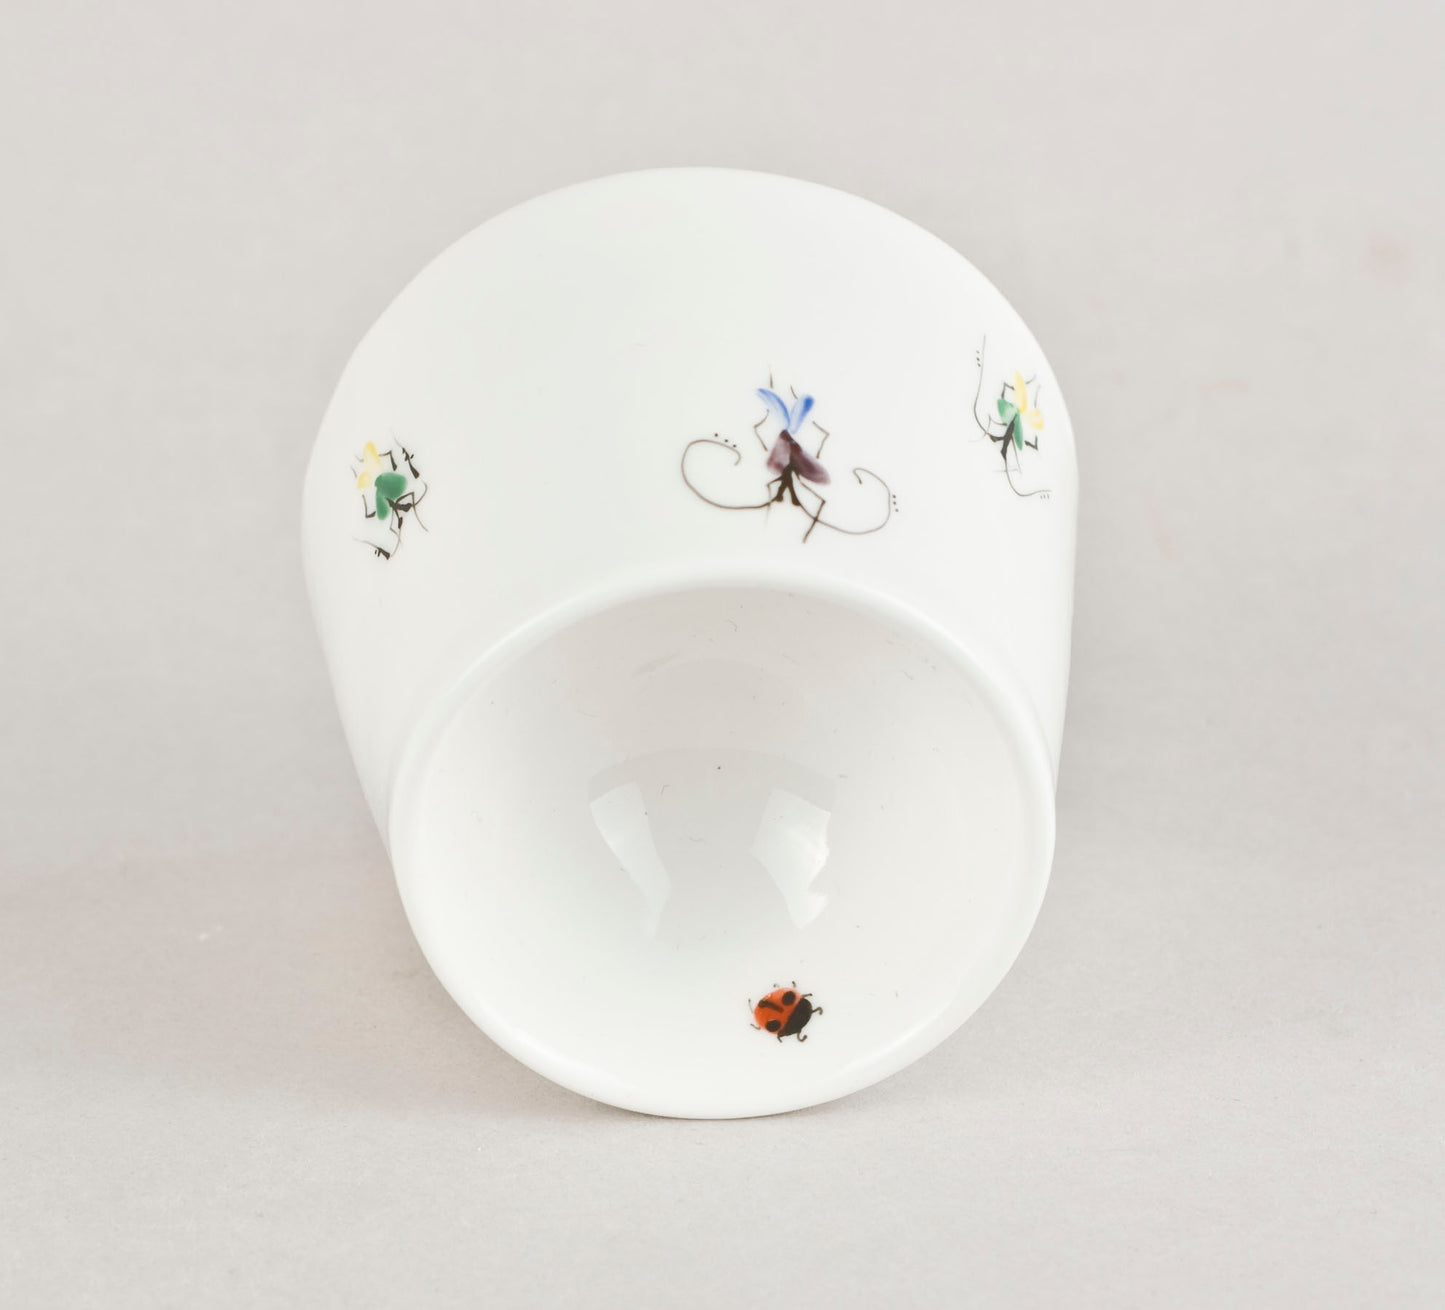 Beetle 6.6. Egg holder